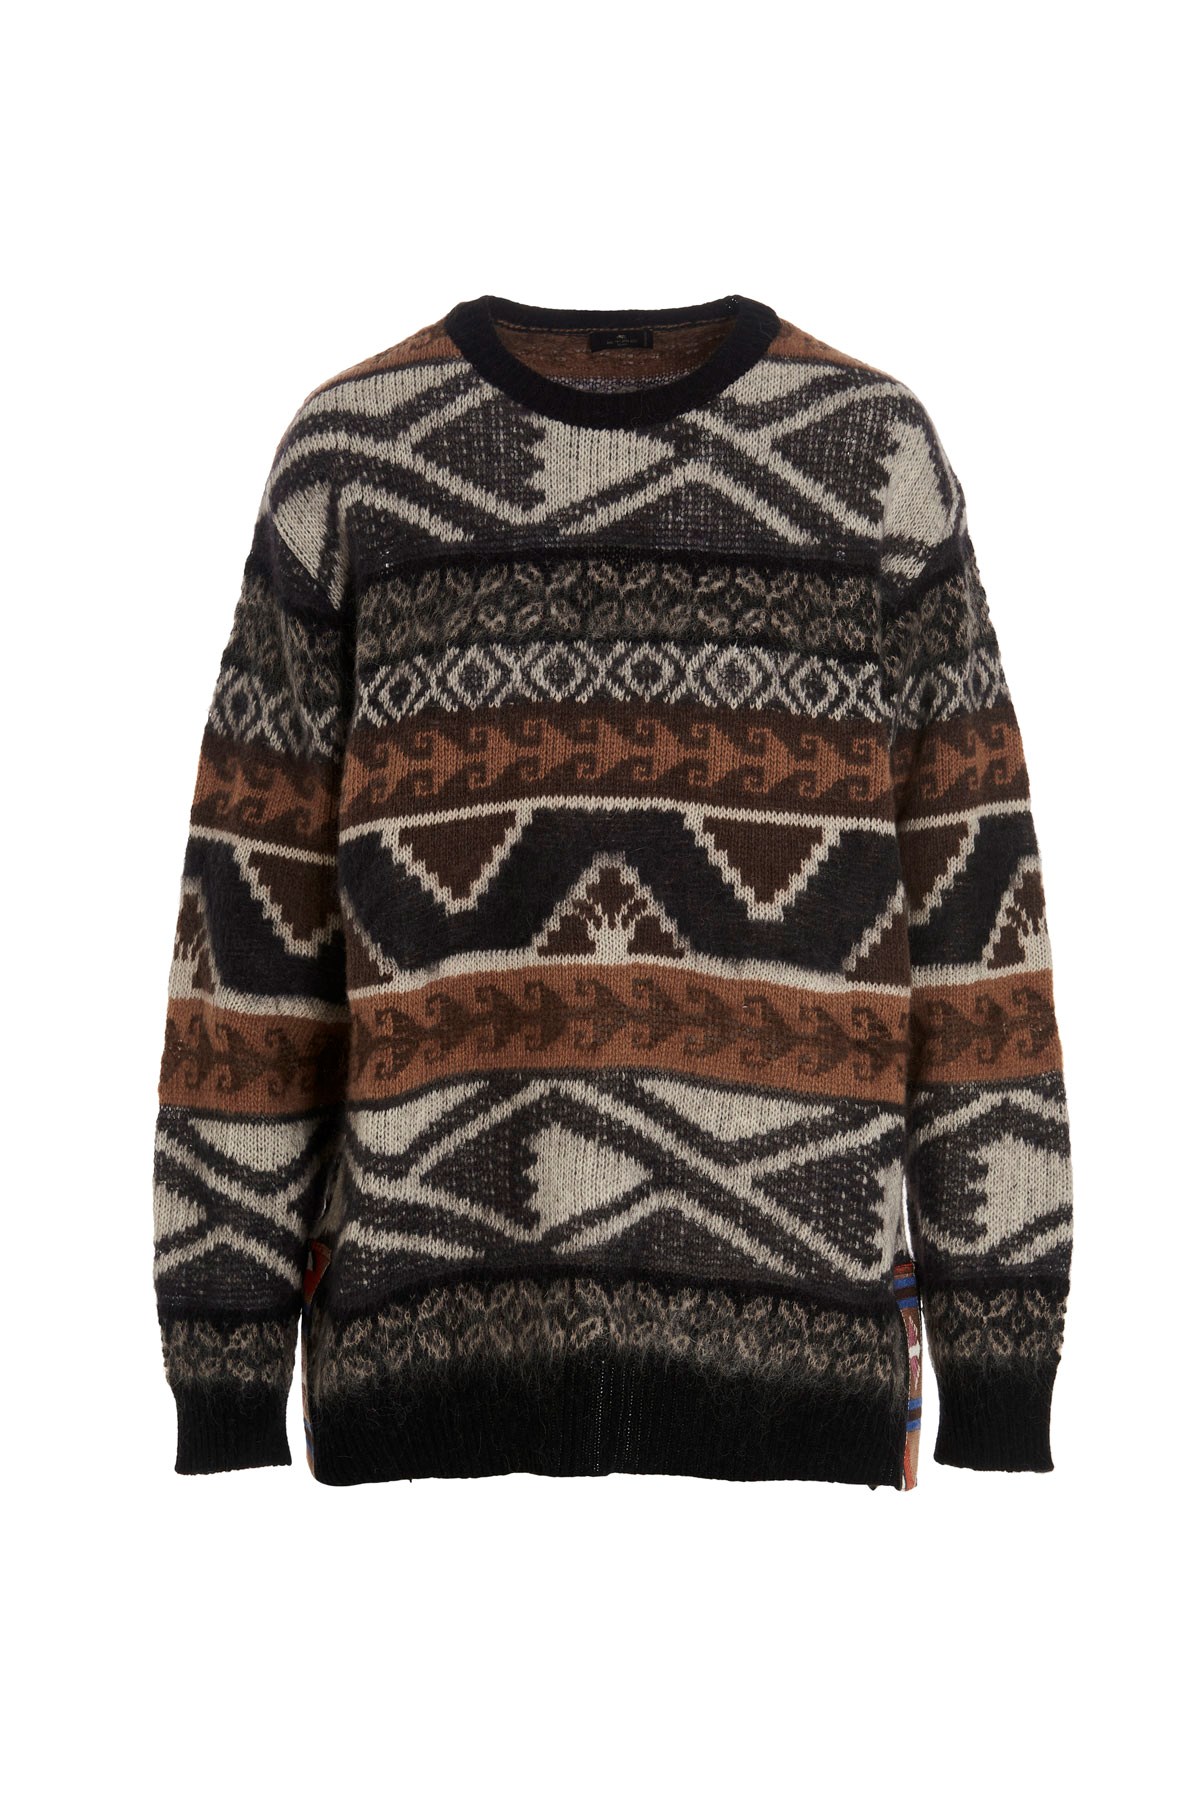 ETRO 'San Francisco’ Sweater